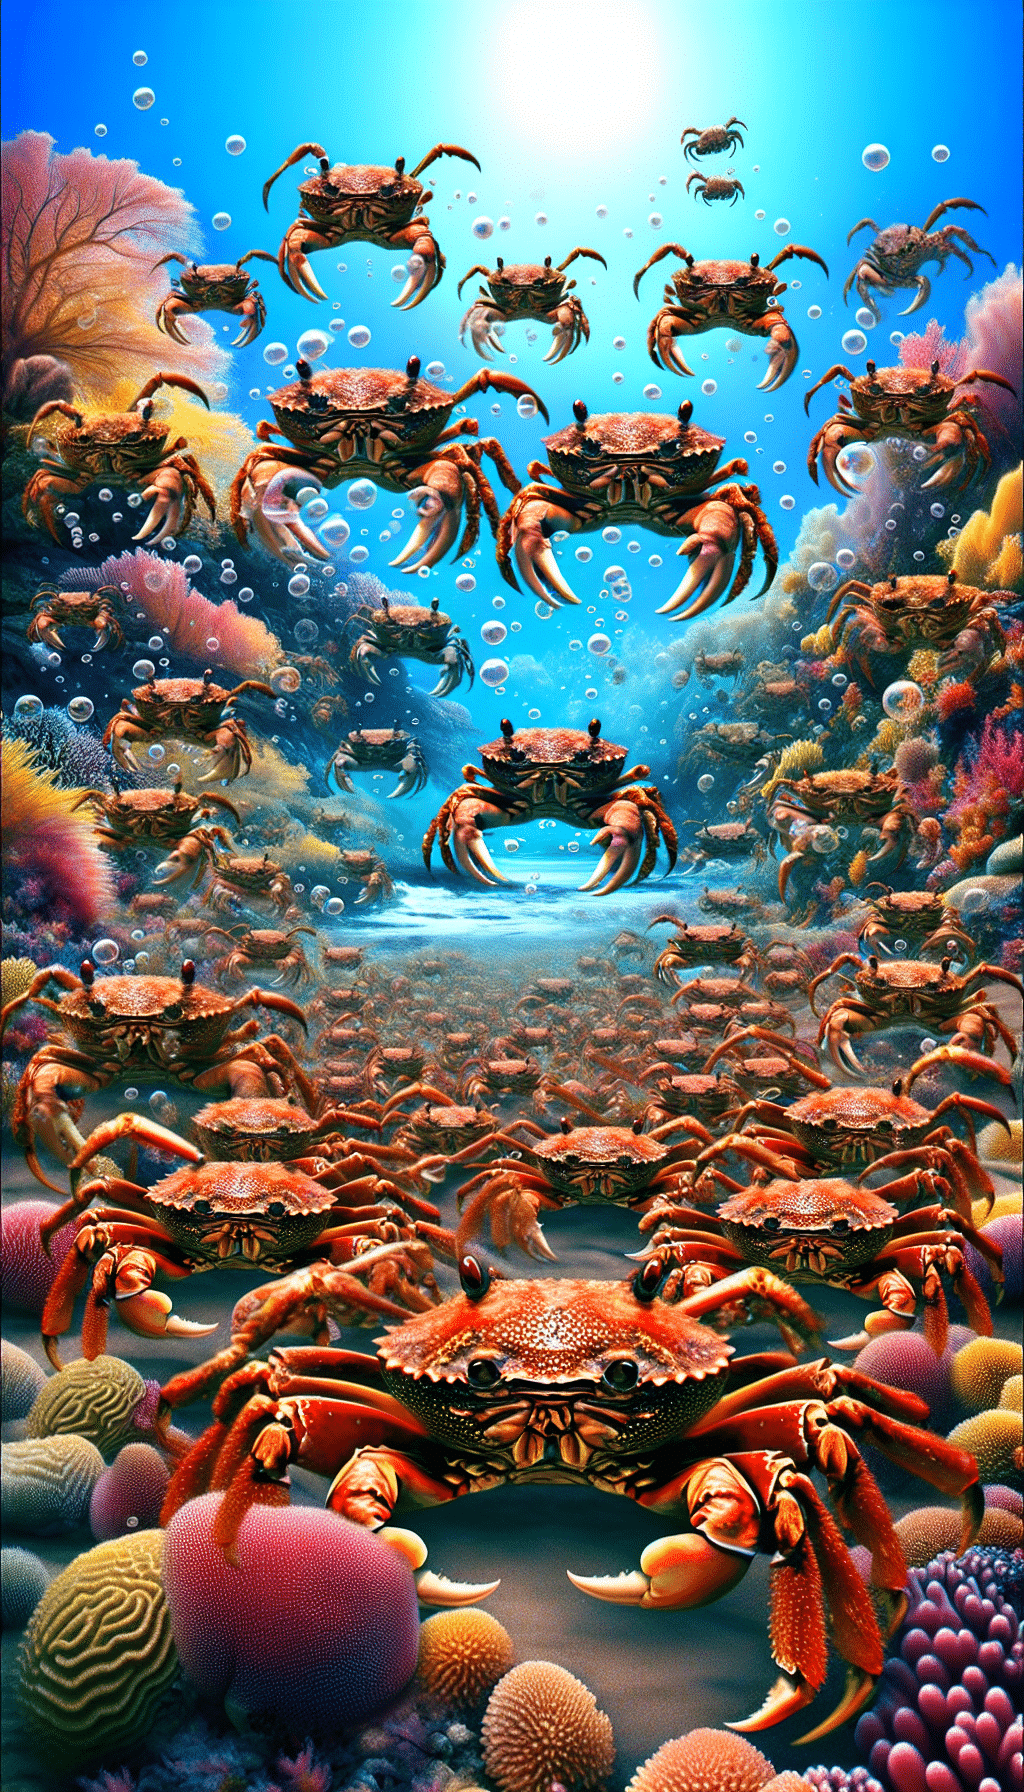 Crab Attack Dreams Explained